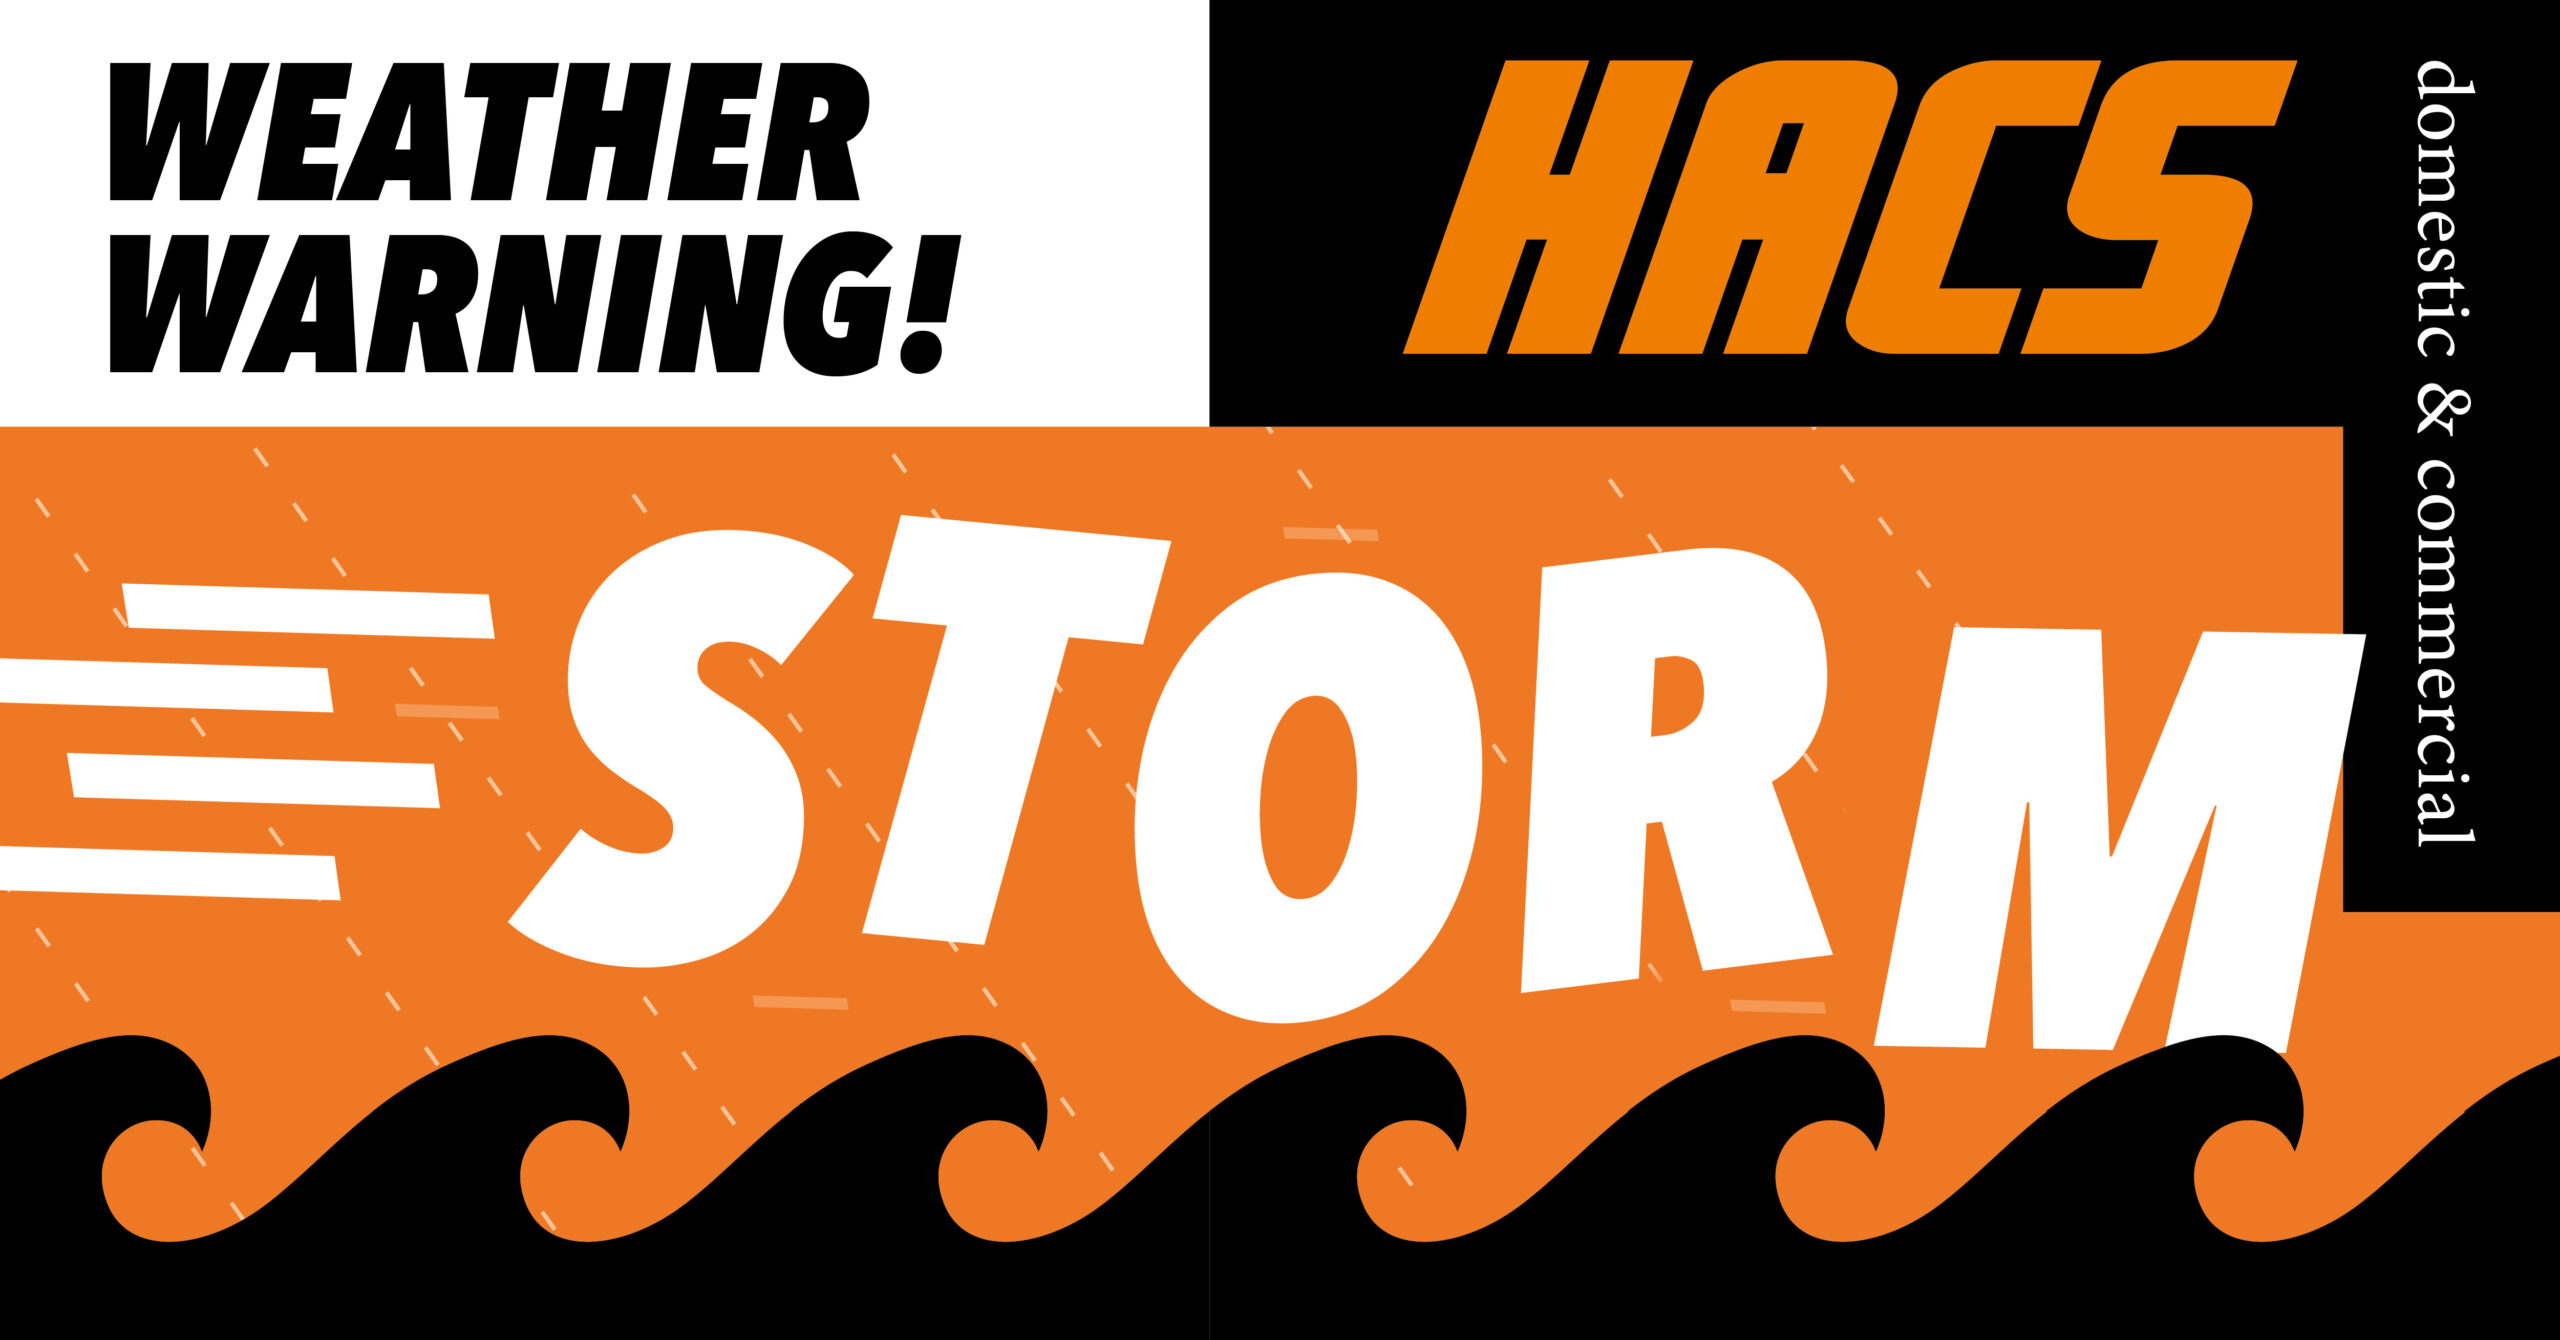 Storm Isha hits Harrogate district 